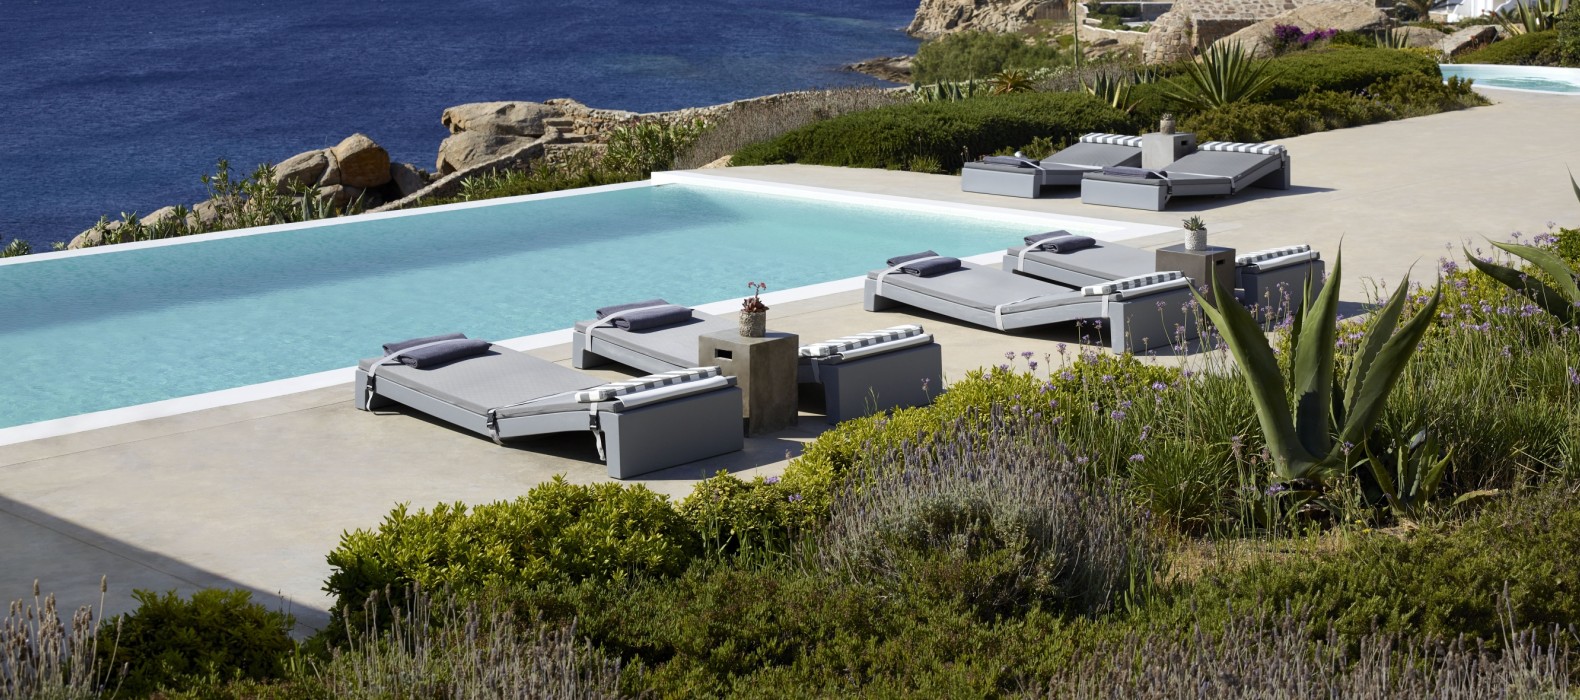 Exterior pool view of Villa Golden Glades in Mykonos